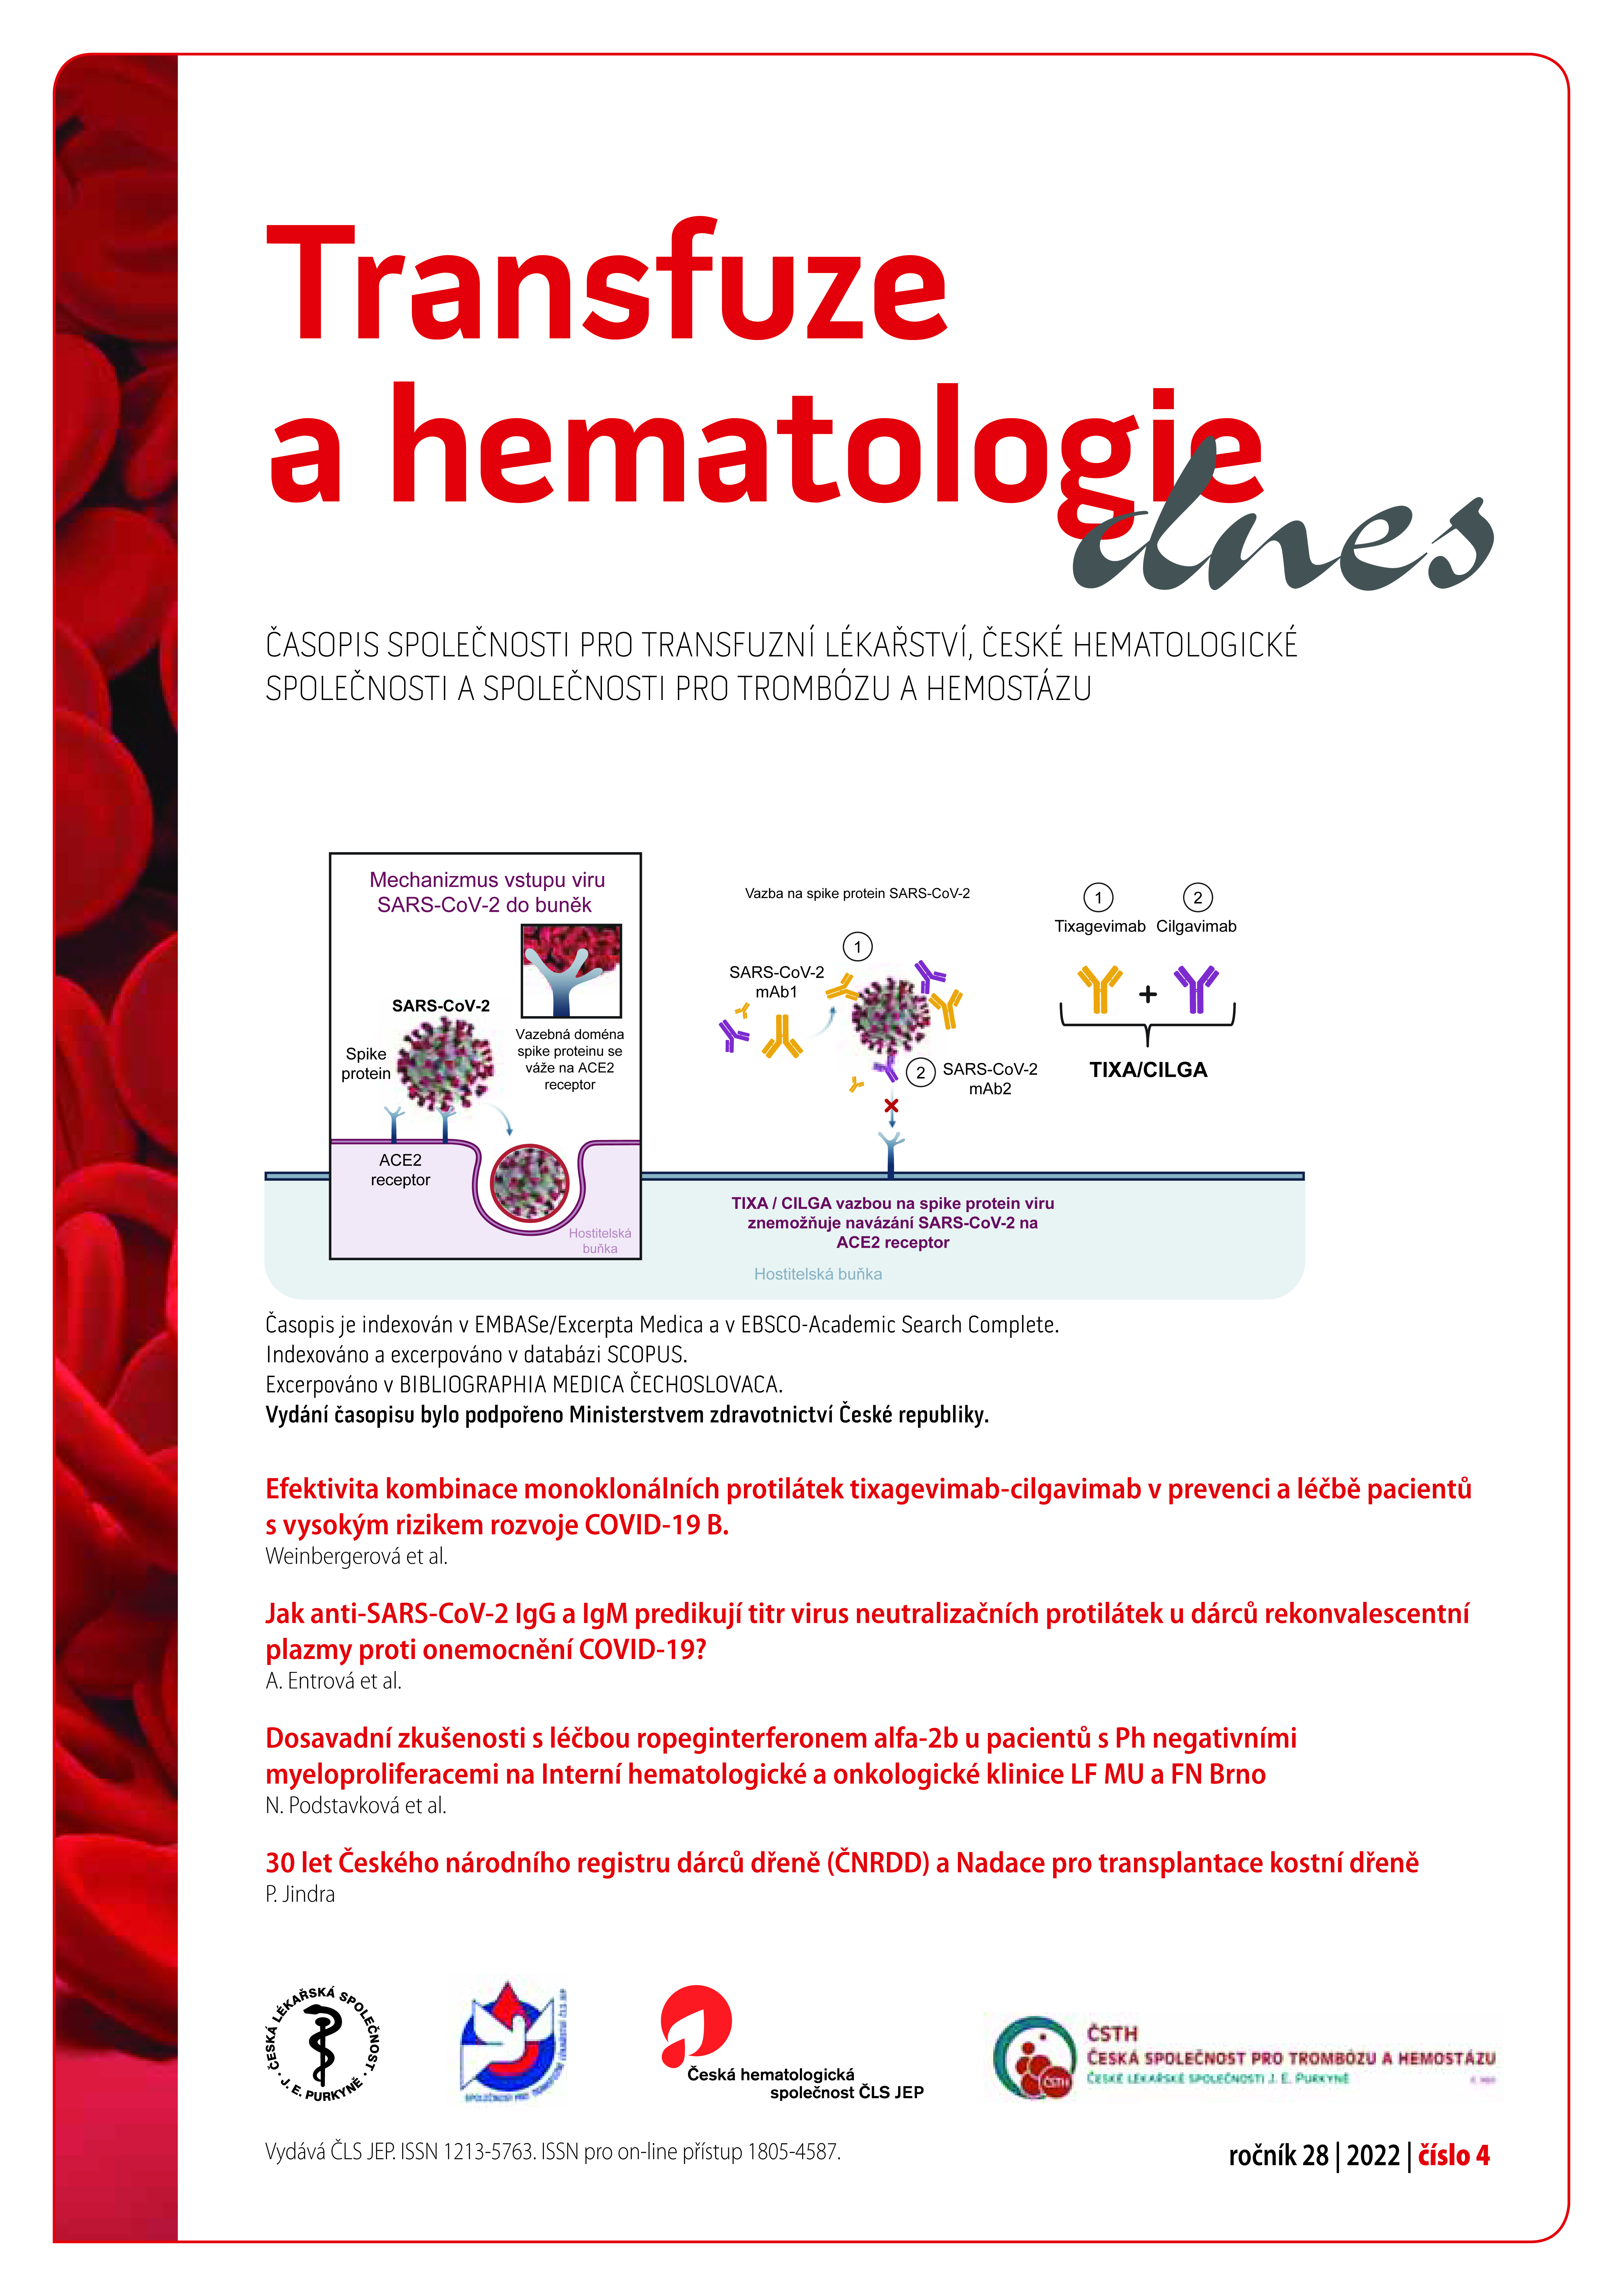 					Náhled Vol 28 No 4 (2022): Transfuze a hematologie dnes
				